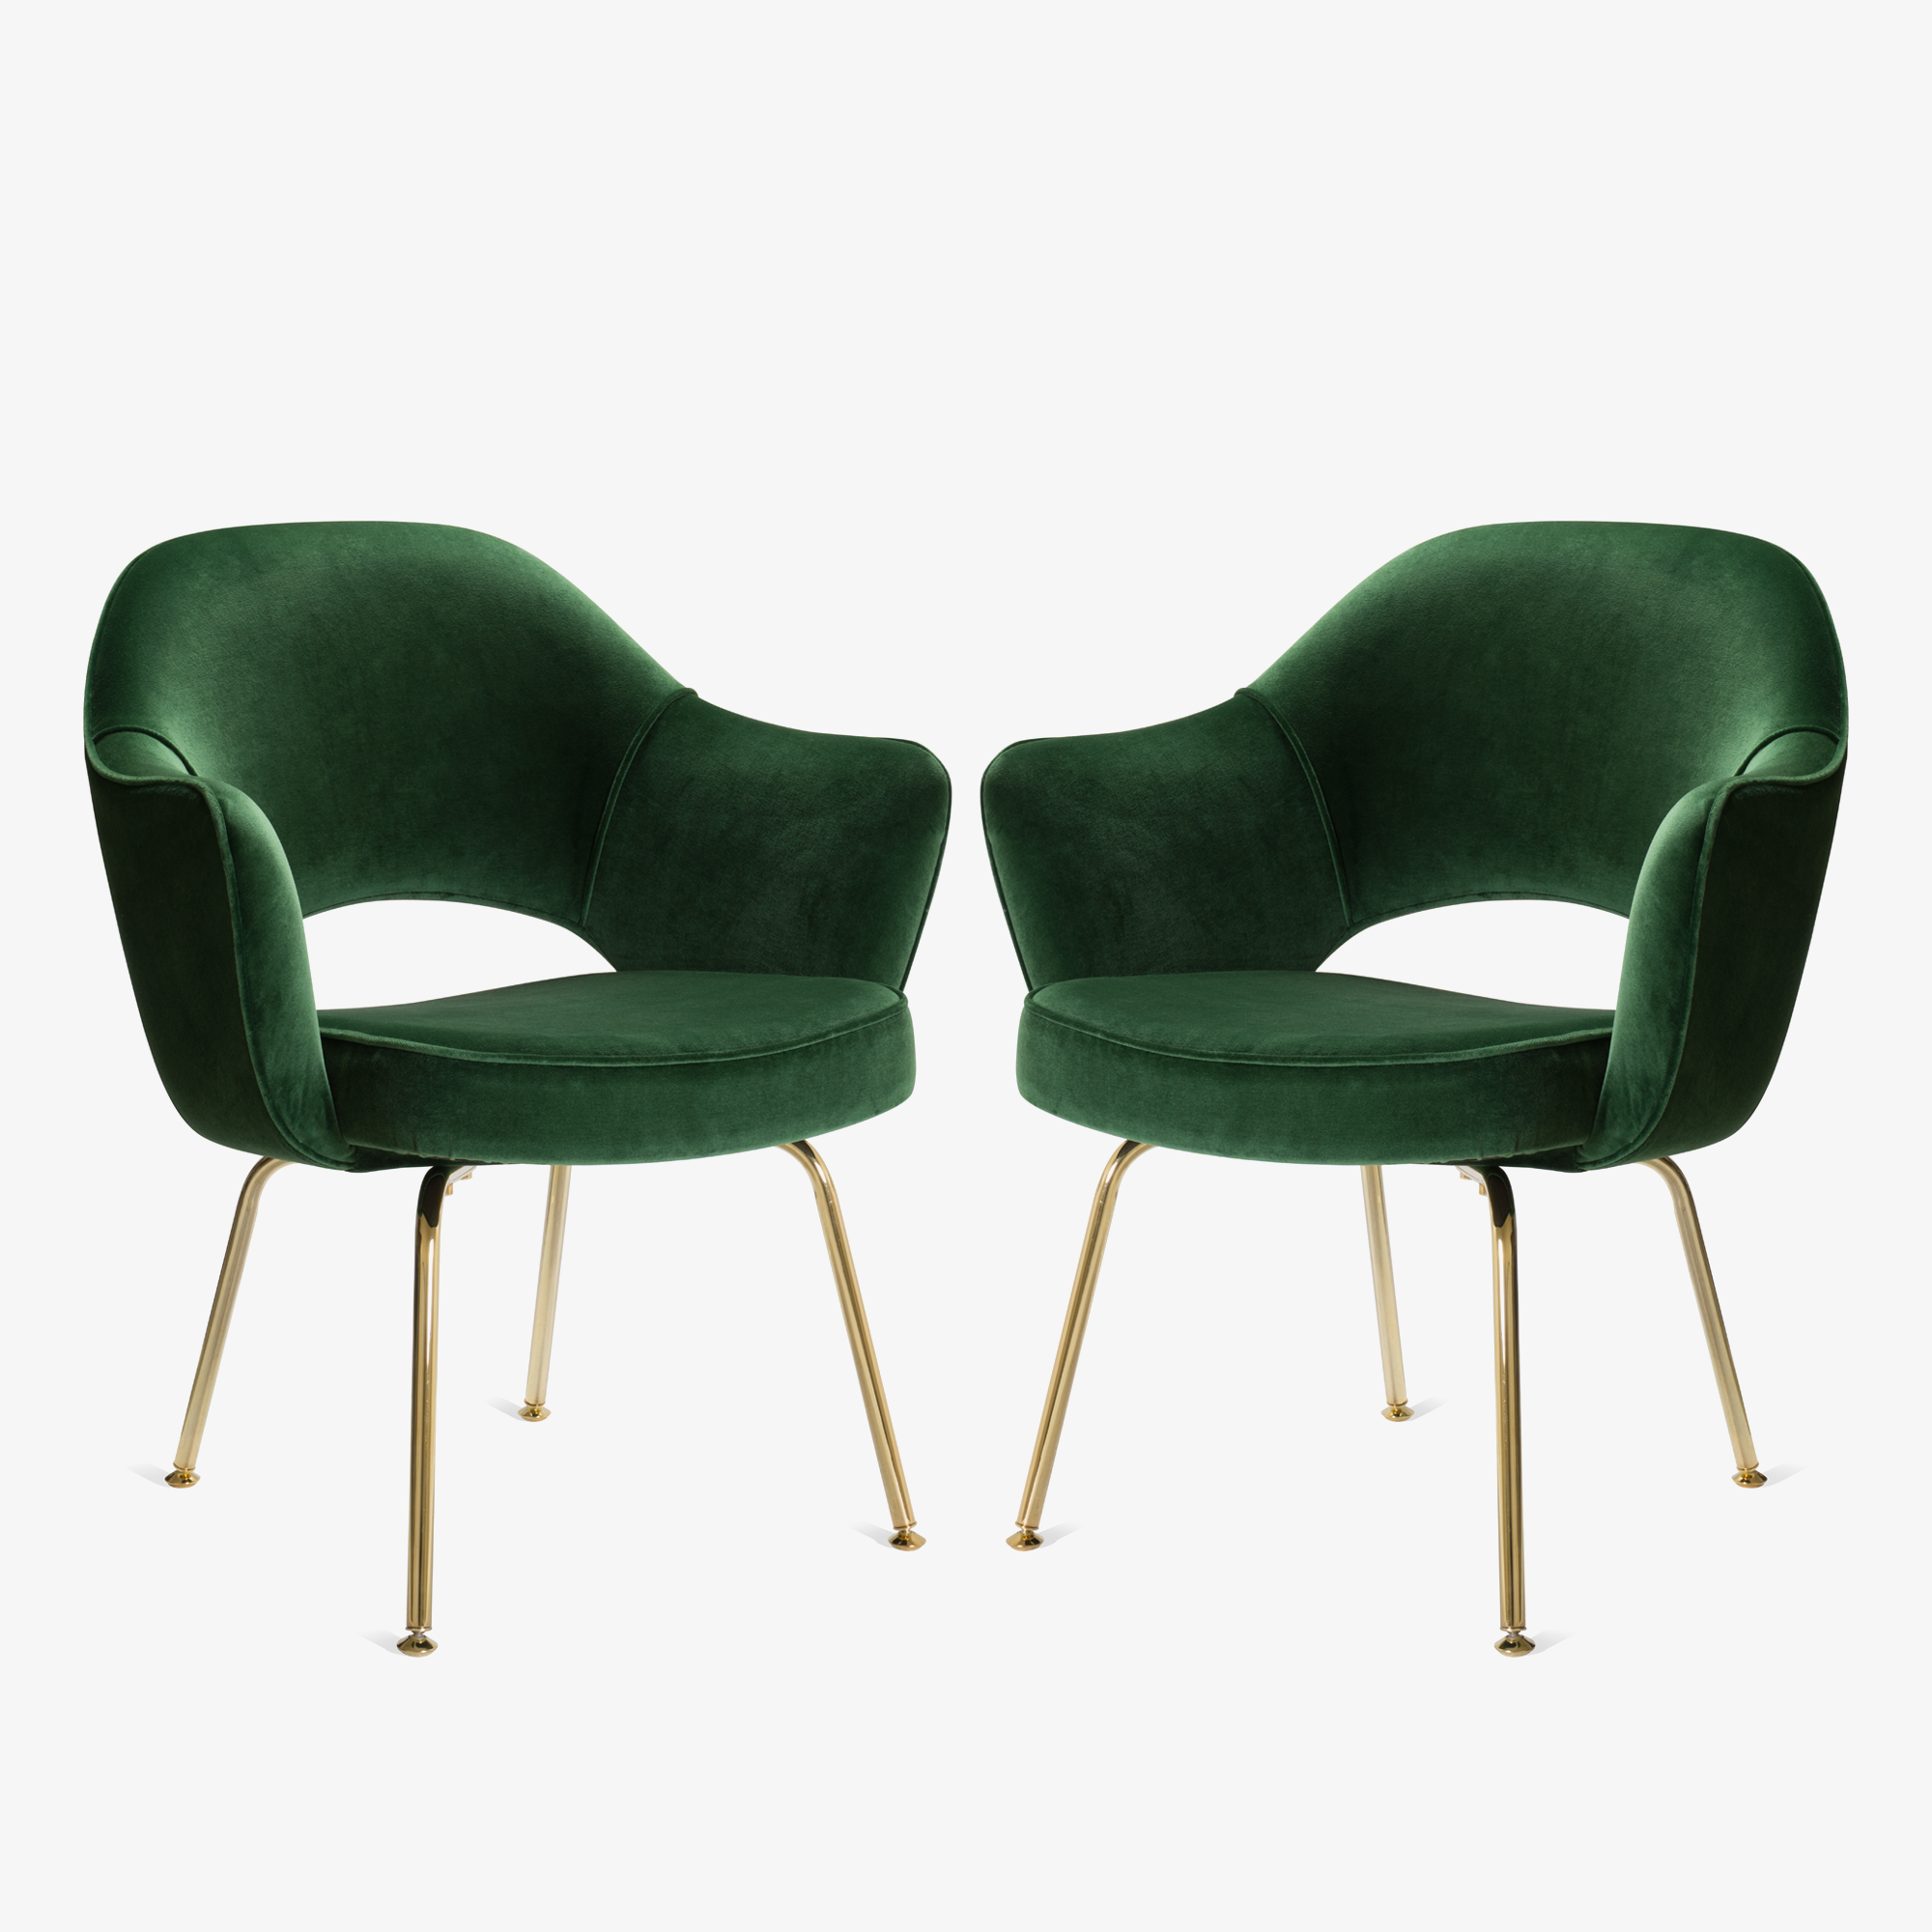 Saarinen Executive Arm Chair in Emerald Velvet, 24k Gold Edition3.png